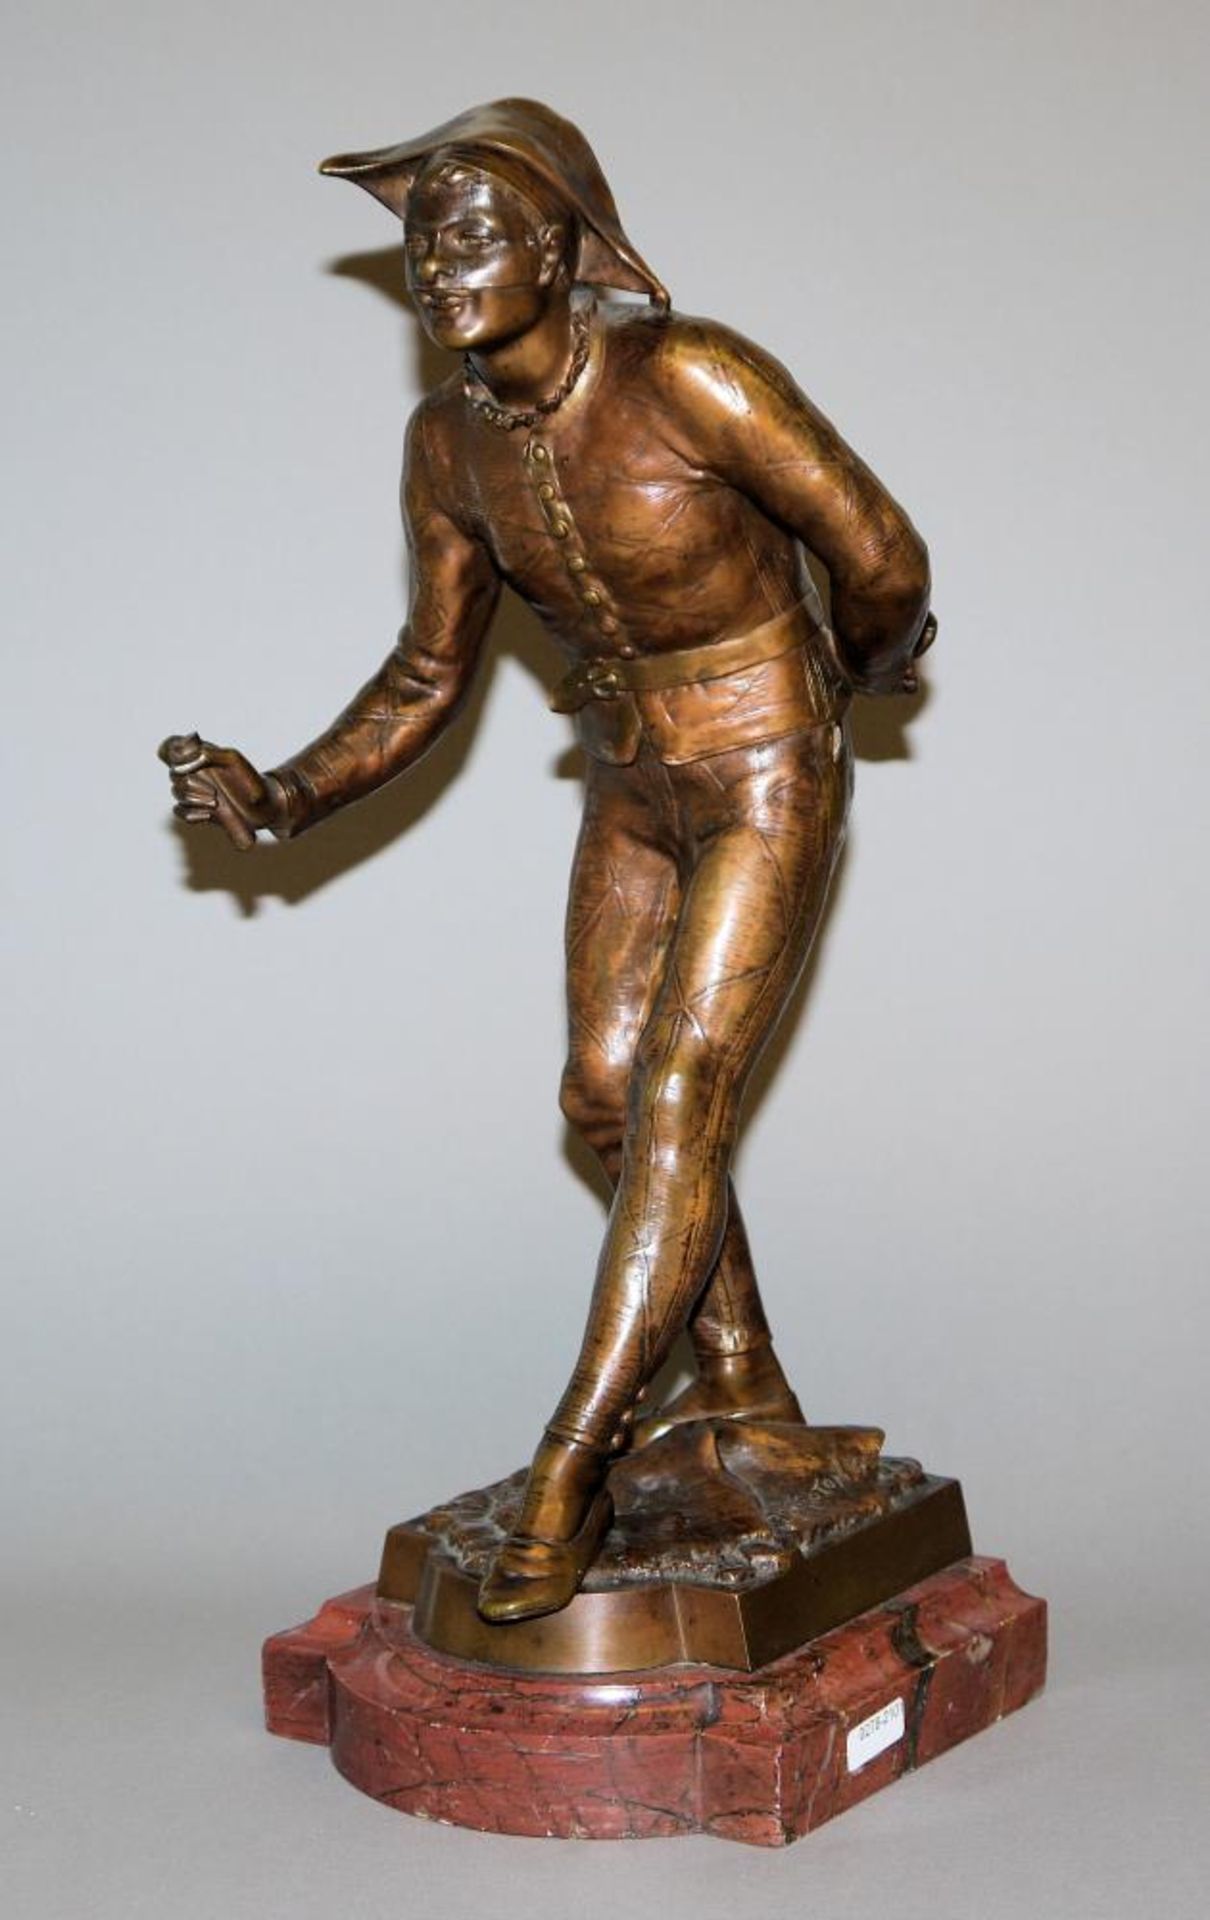 Claudius Marioton, Bronzeplastik Harlekin Claudius Marioton, 1844 - 1919, leicht gebeugt